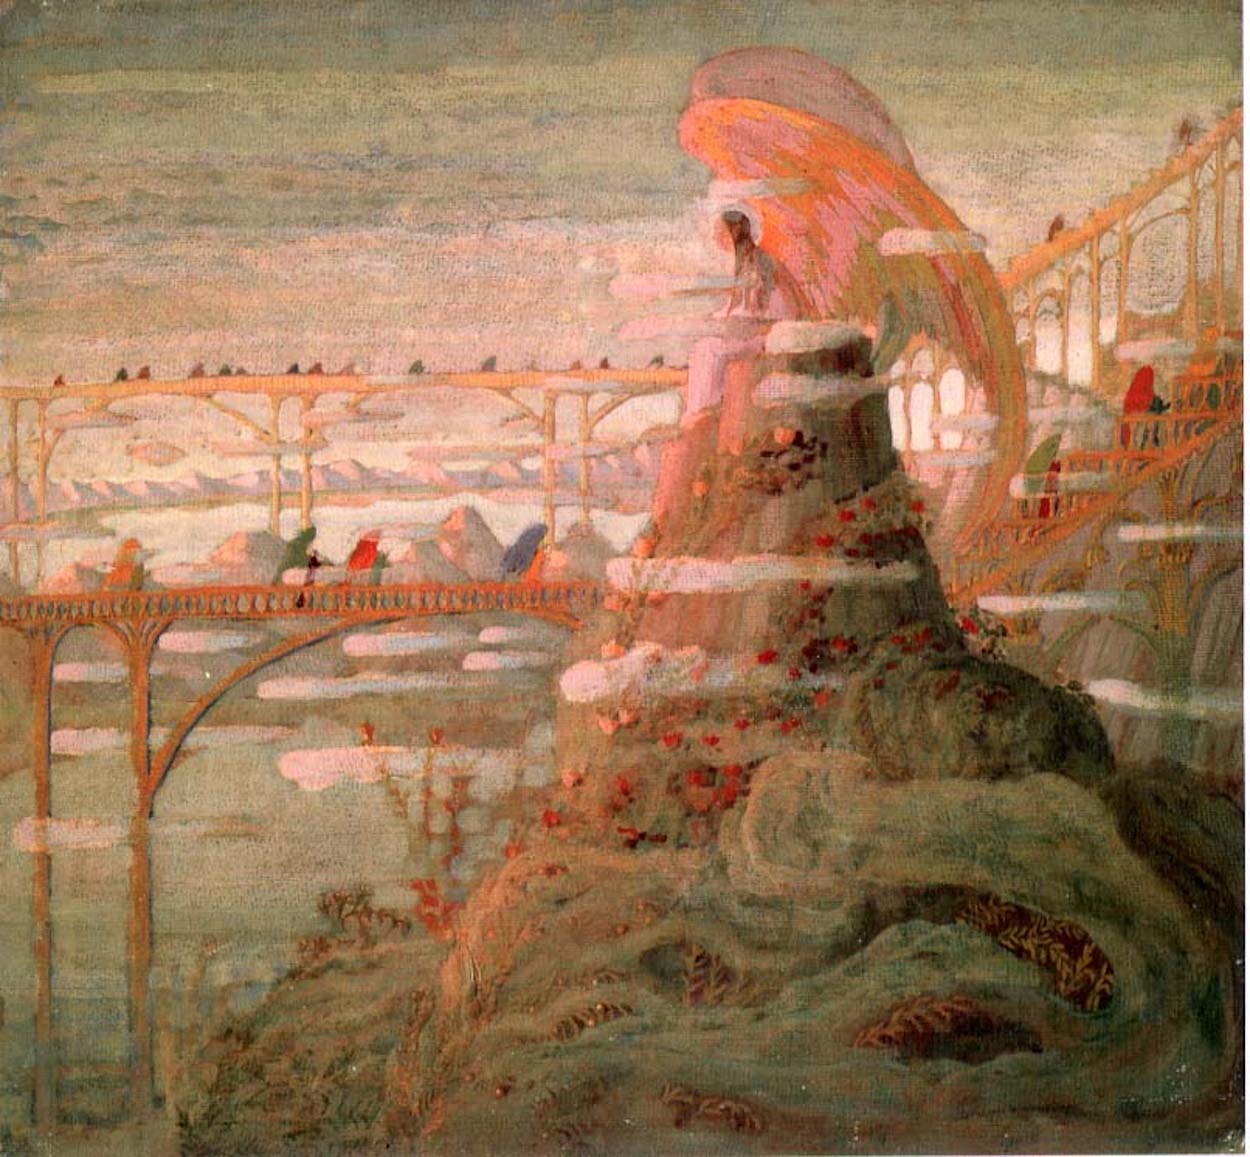 Ангел (Ангельська прелюдія) by Mikalojus Konstantinas Čiurlionis - 1909 - 50 x 53,7 см 